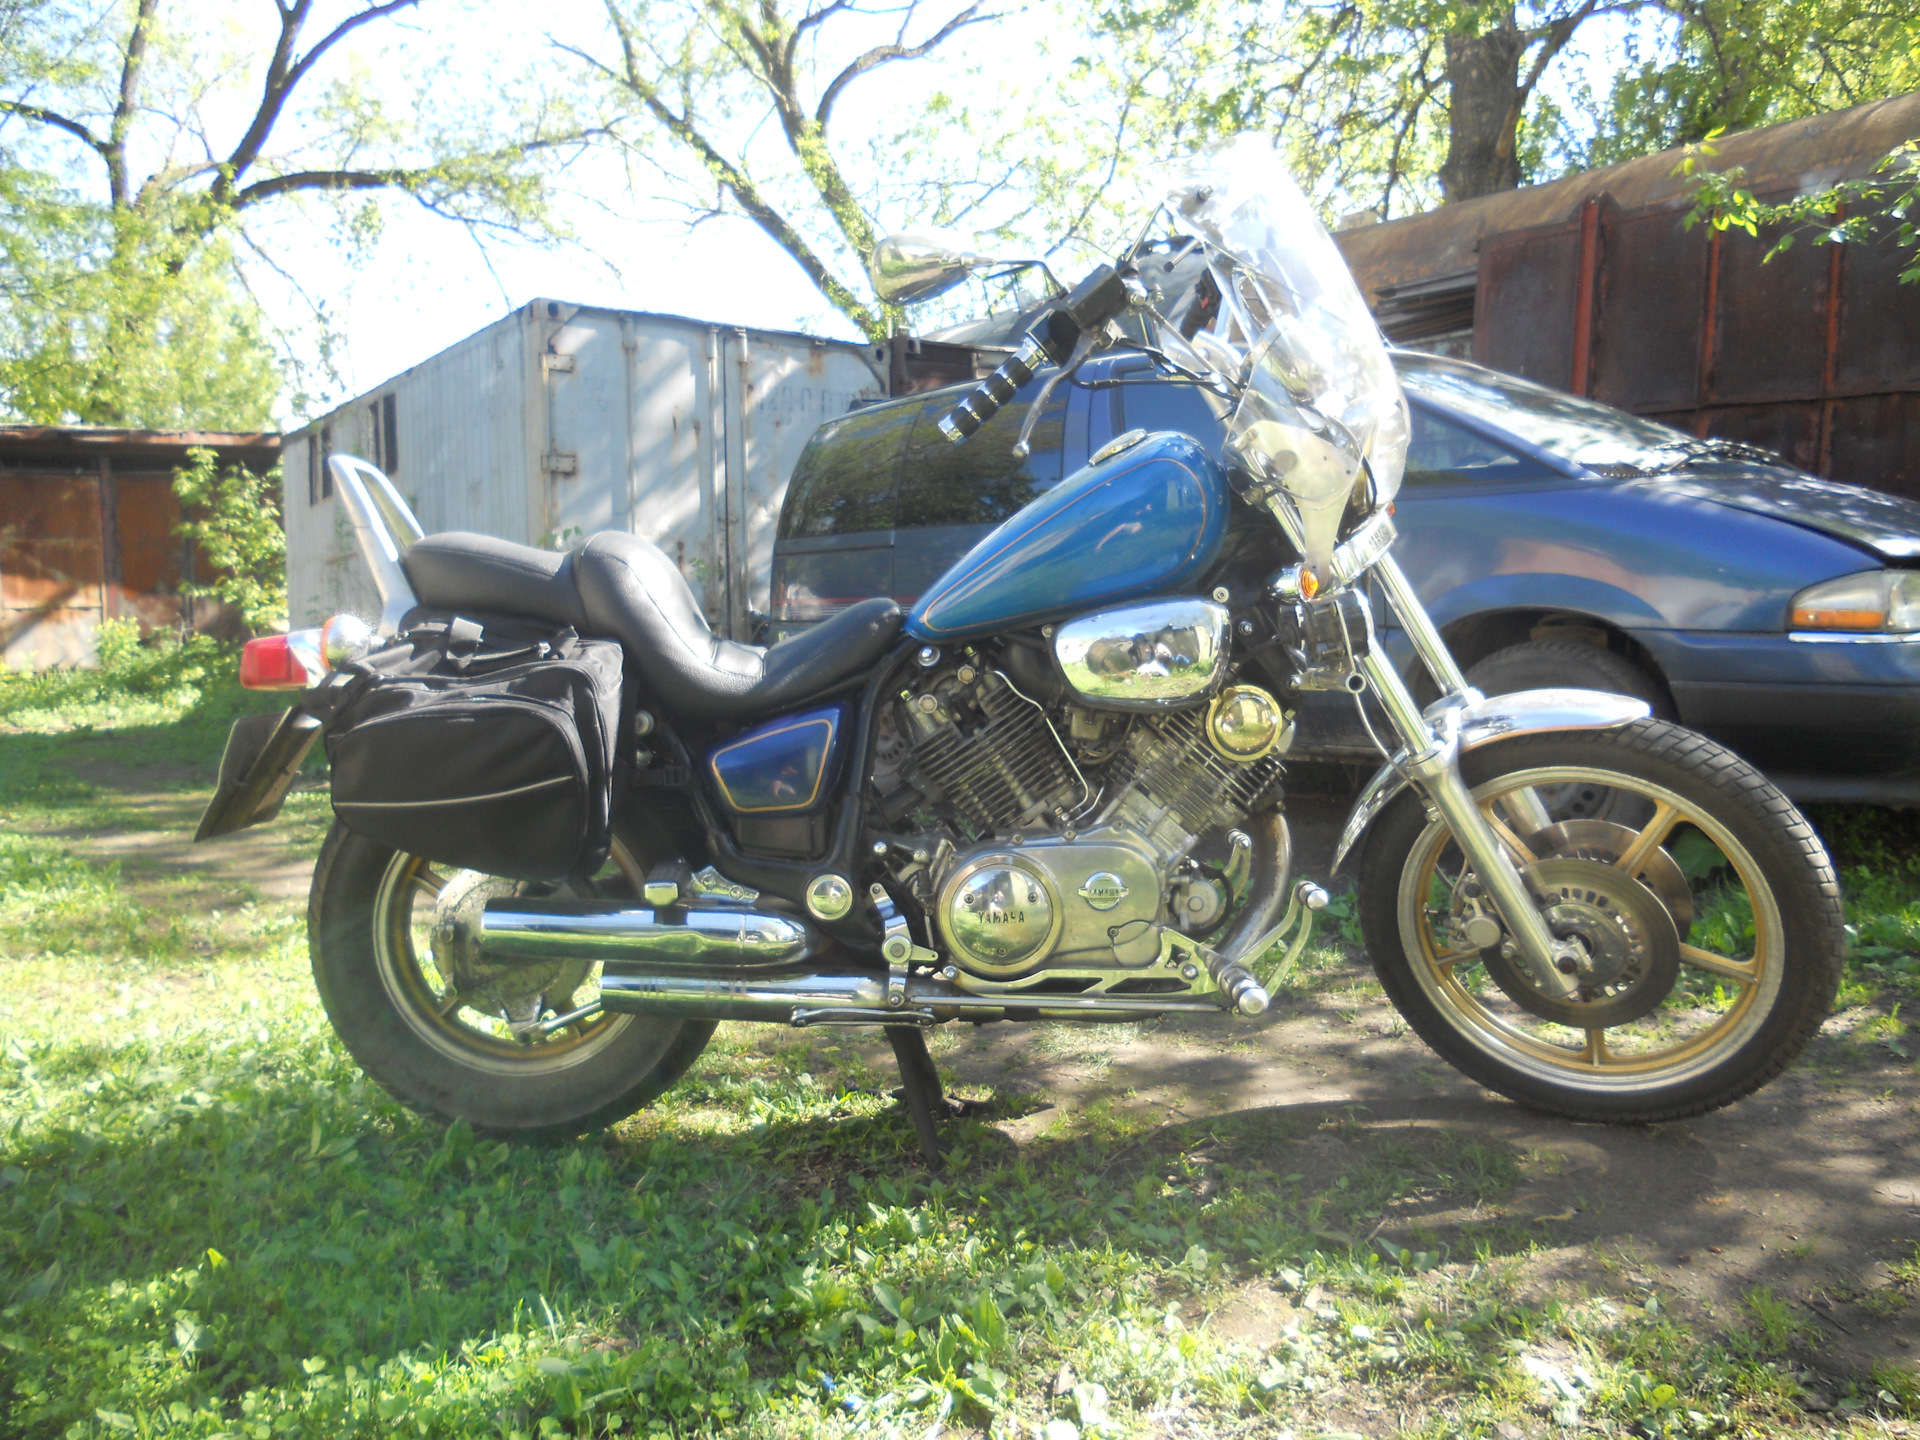 Yamaha xv750 virago: review, history, specs - bikeswiki.com, japanese motorcycle encyclopedia